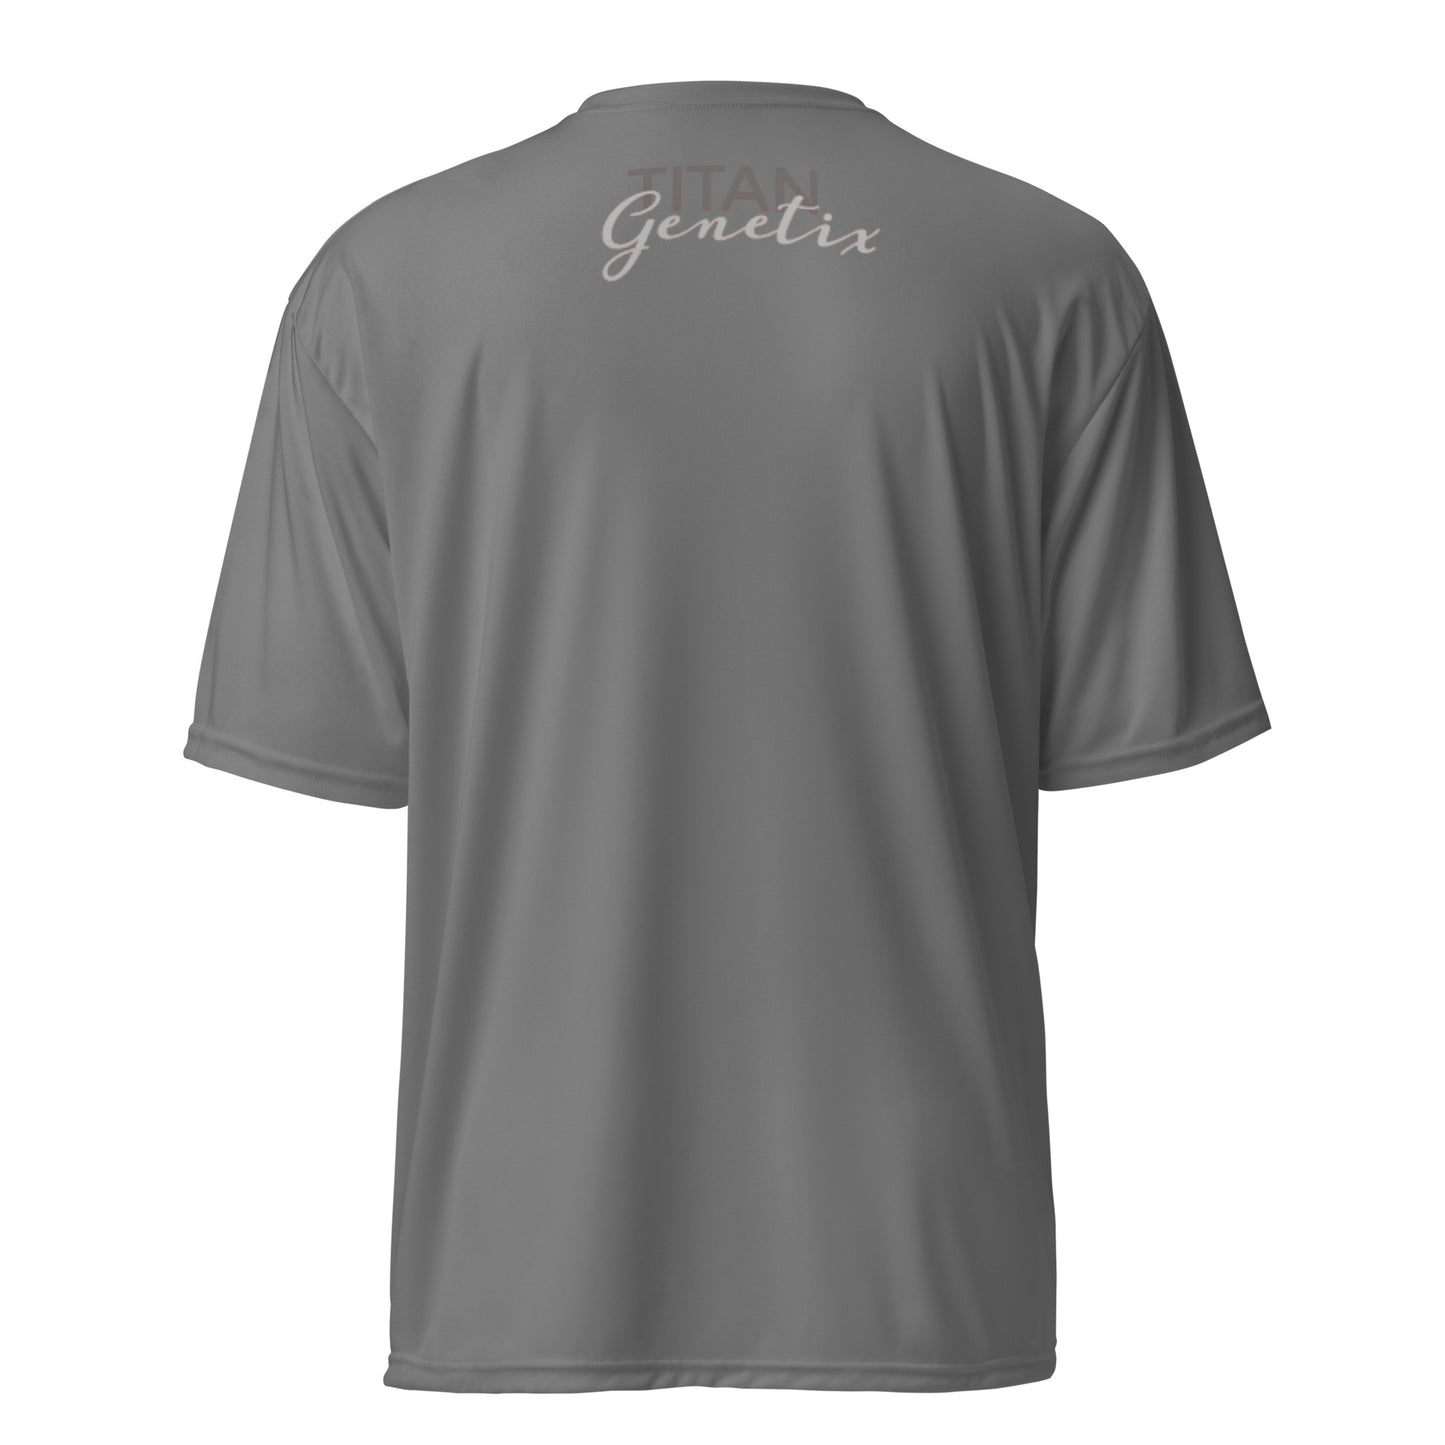 Titan Genetix - Be - Unisex Performance Jersey T-Shirt